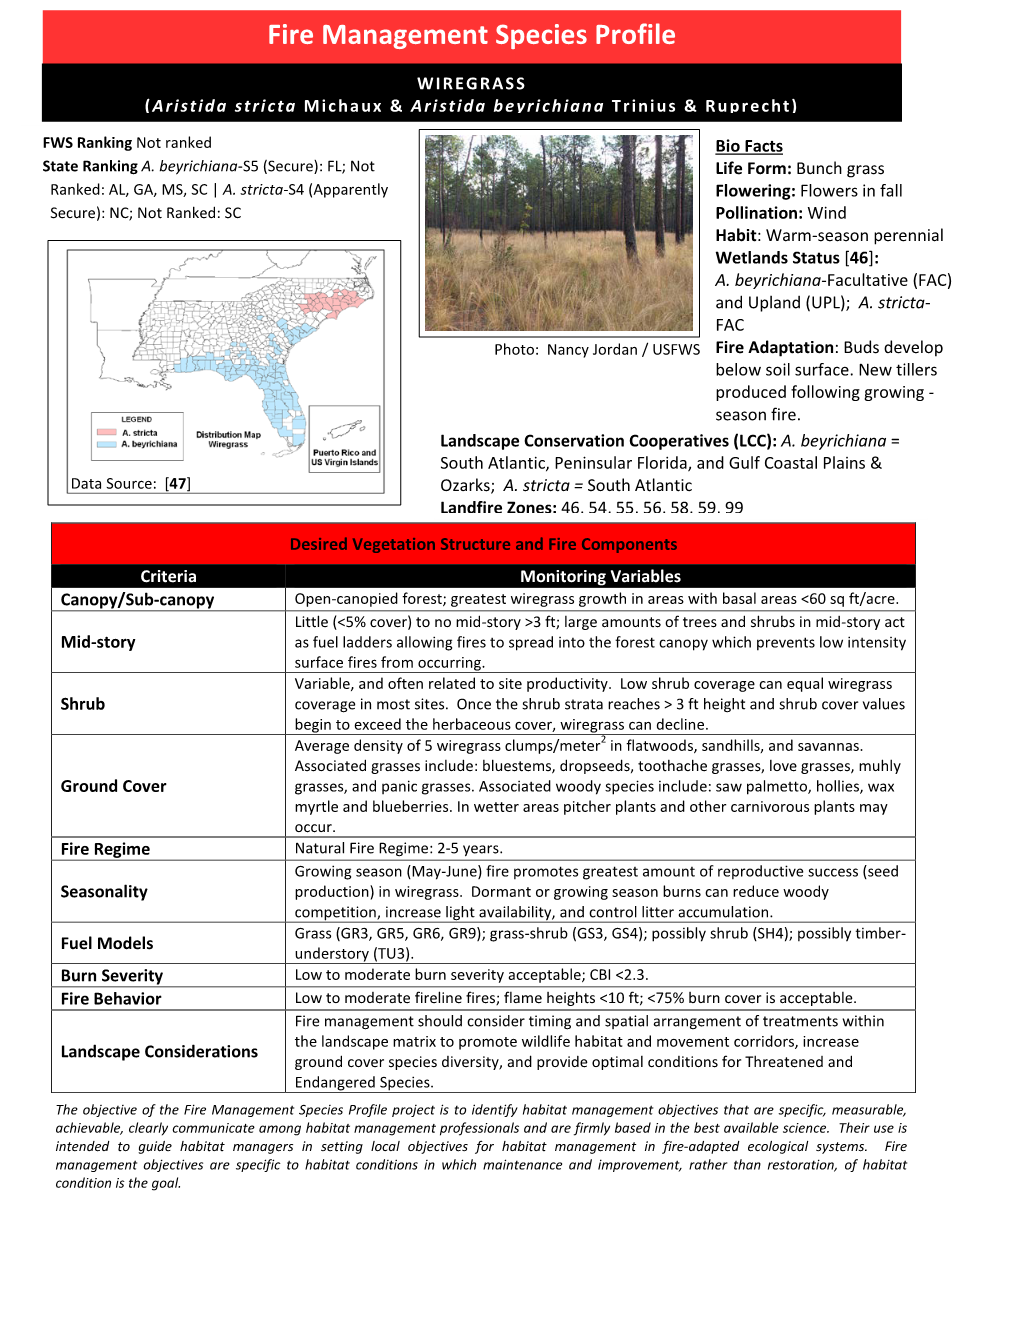 Wiregrass-Fire-Management-Species-Profile.Pdf